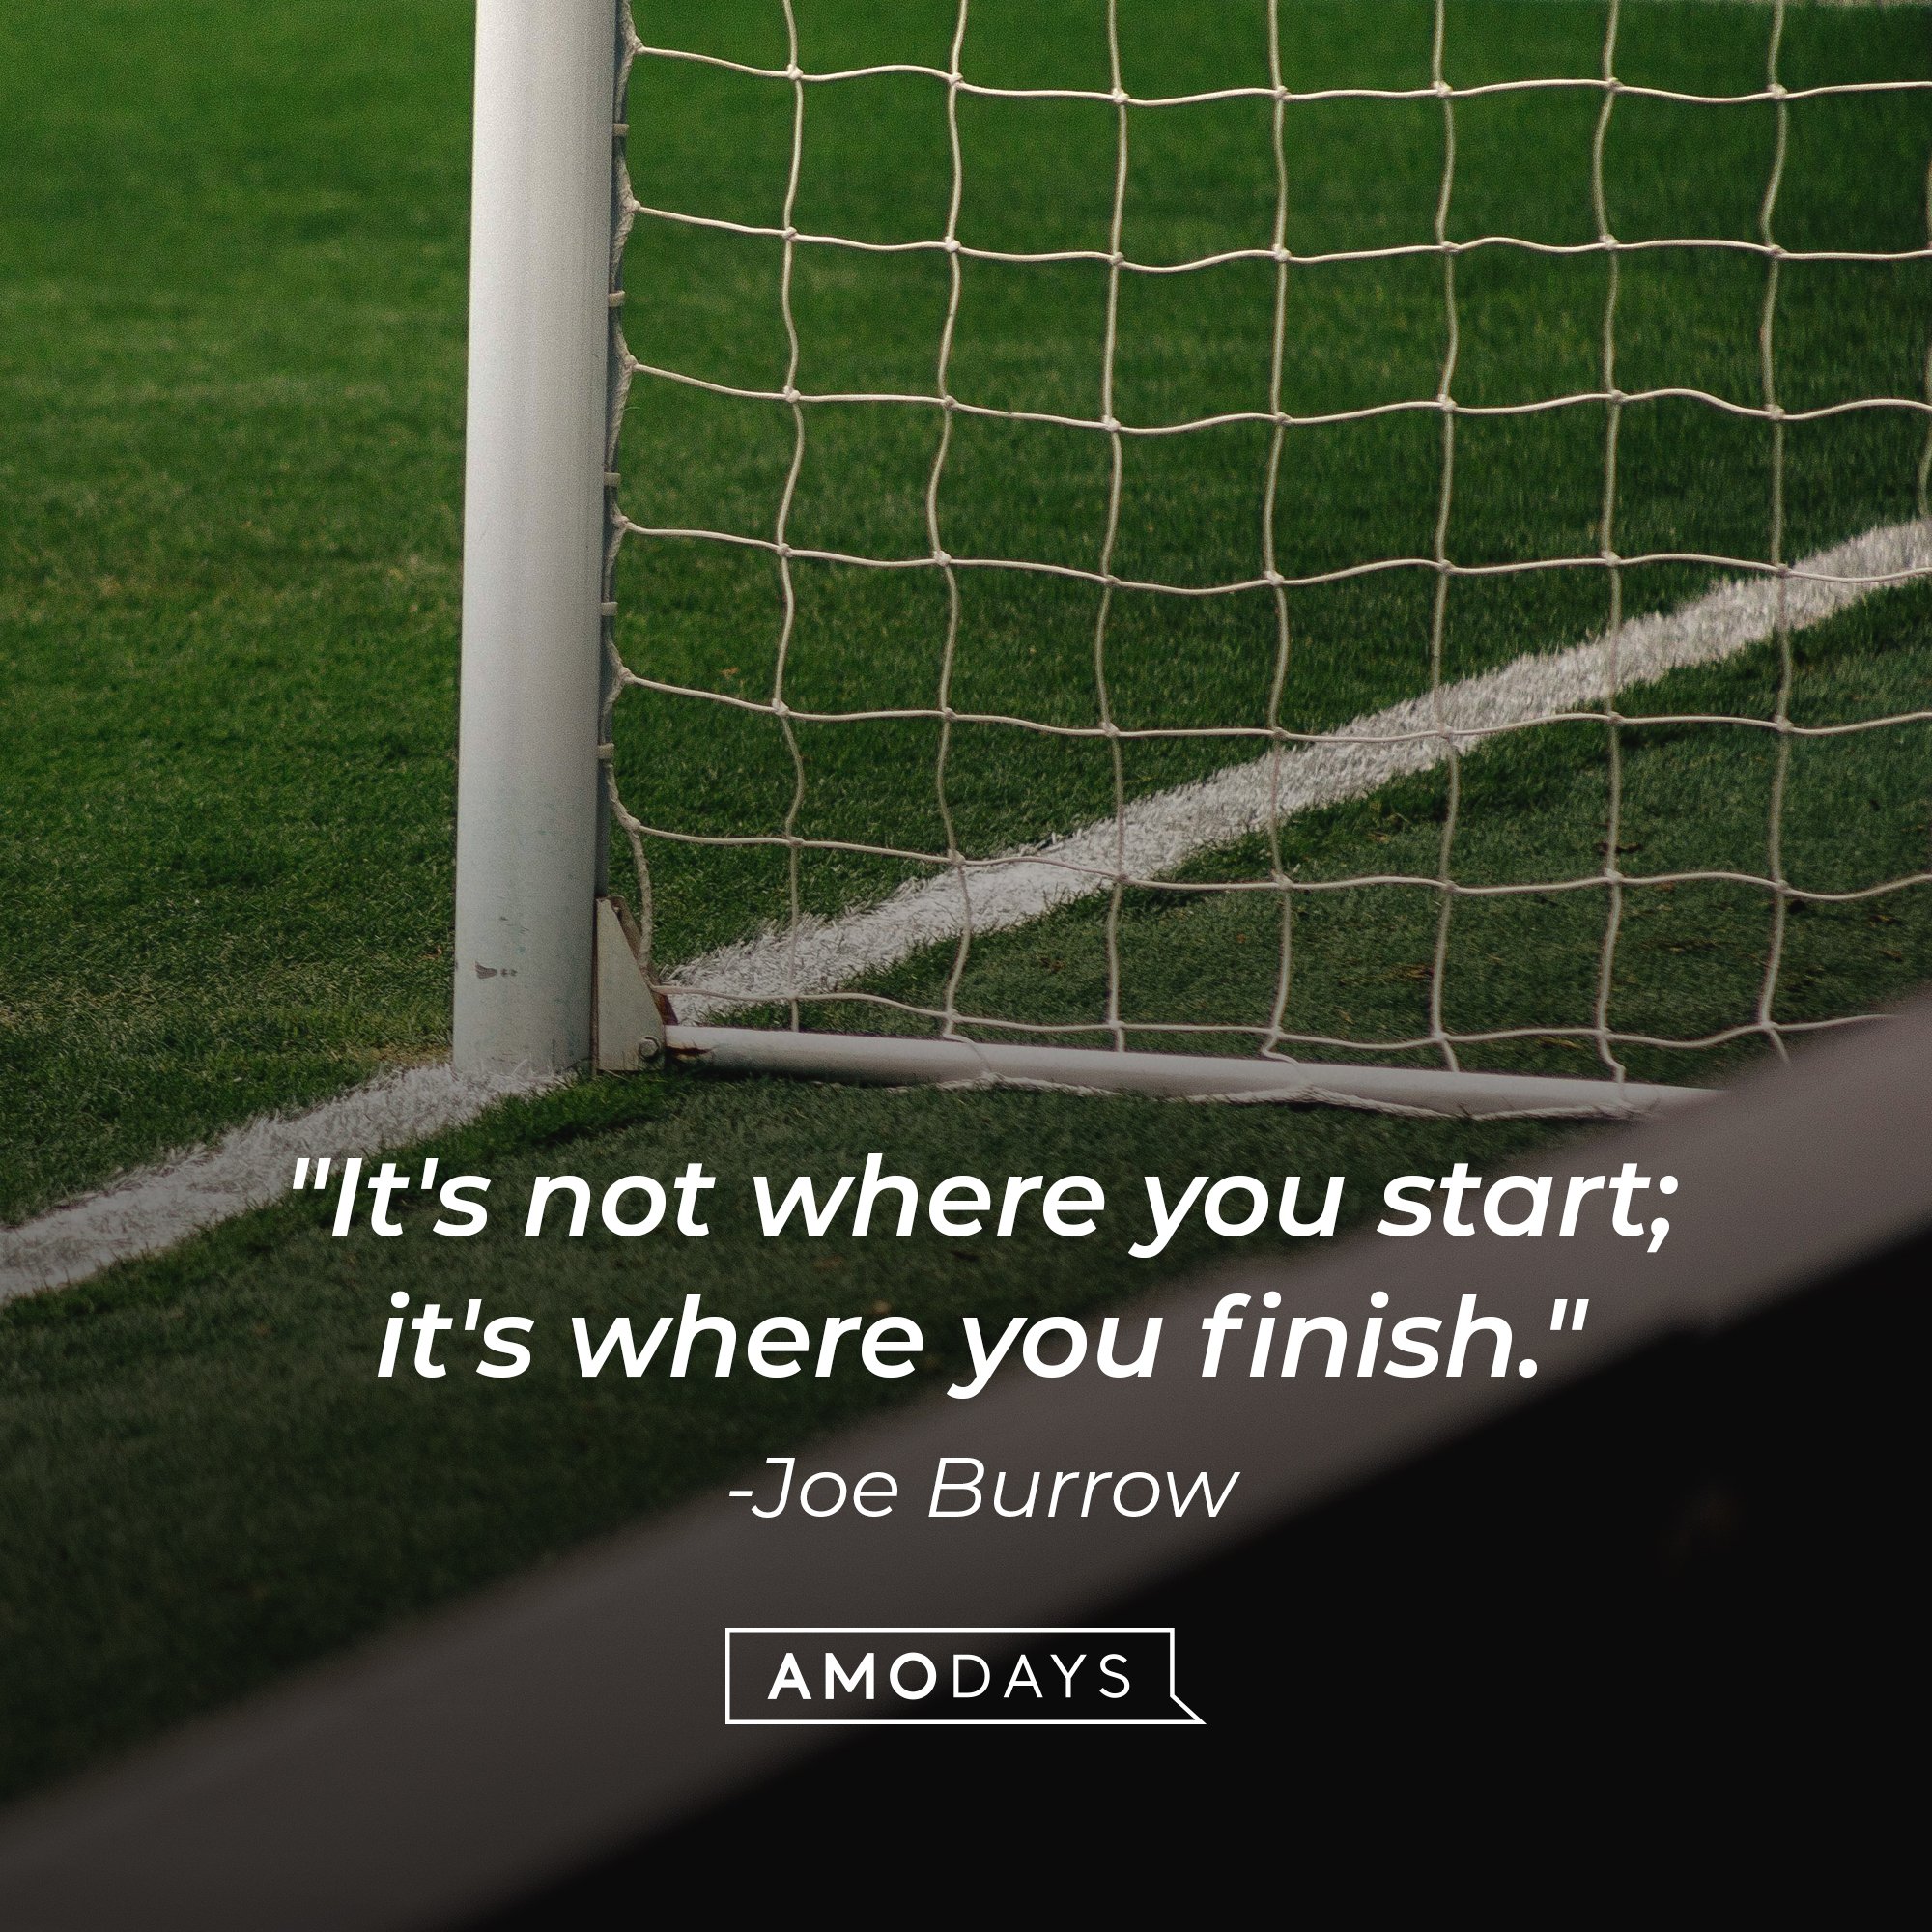  Joe Burrow's quote: "It's not where you start; it's where you finish." | Image: AmoDays